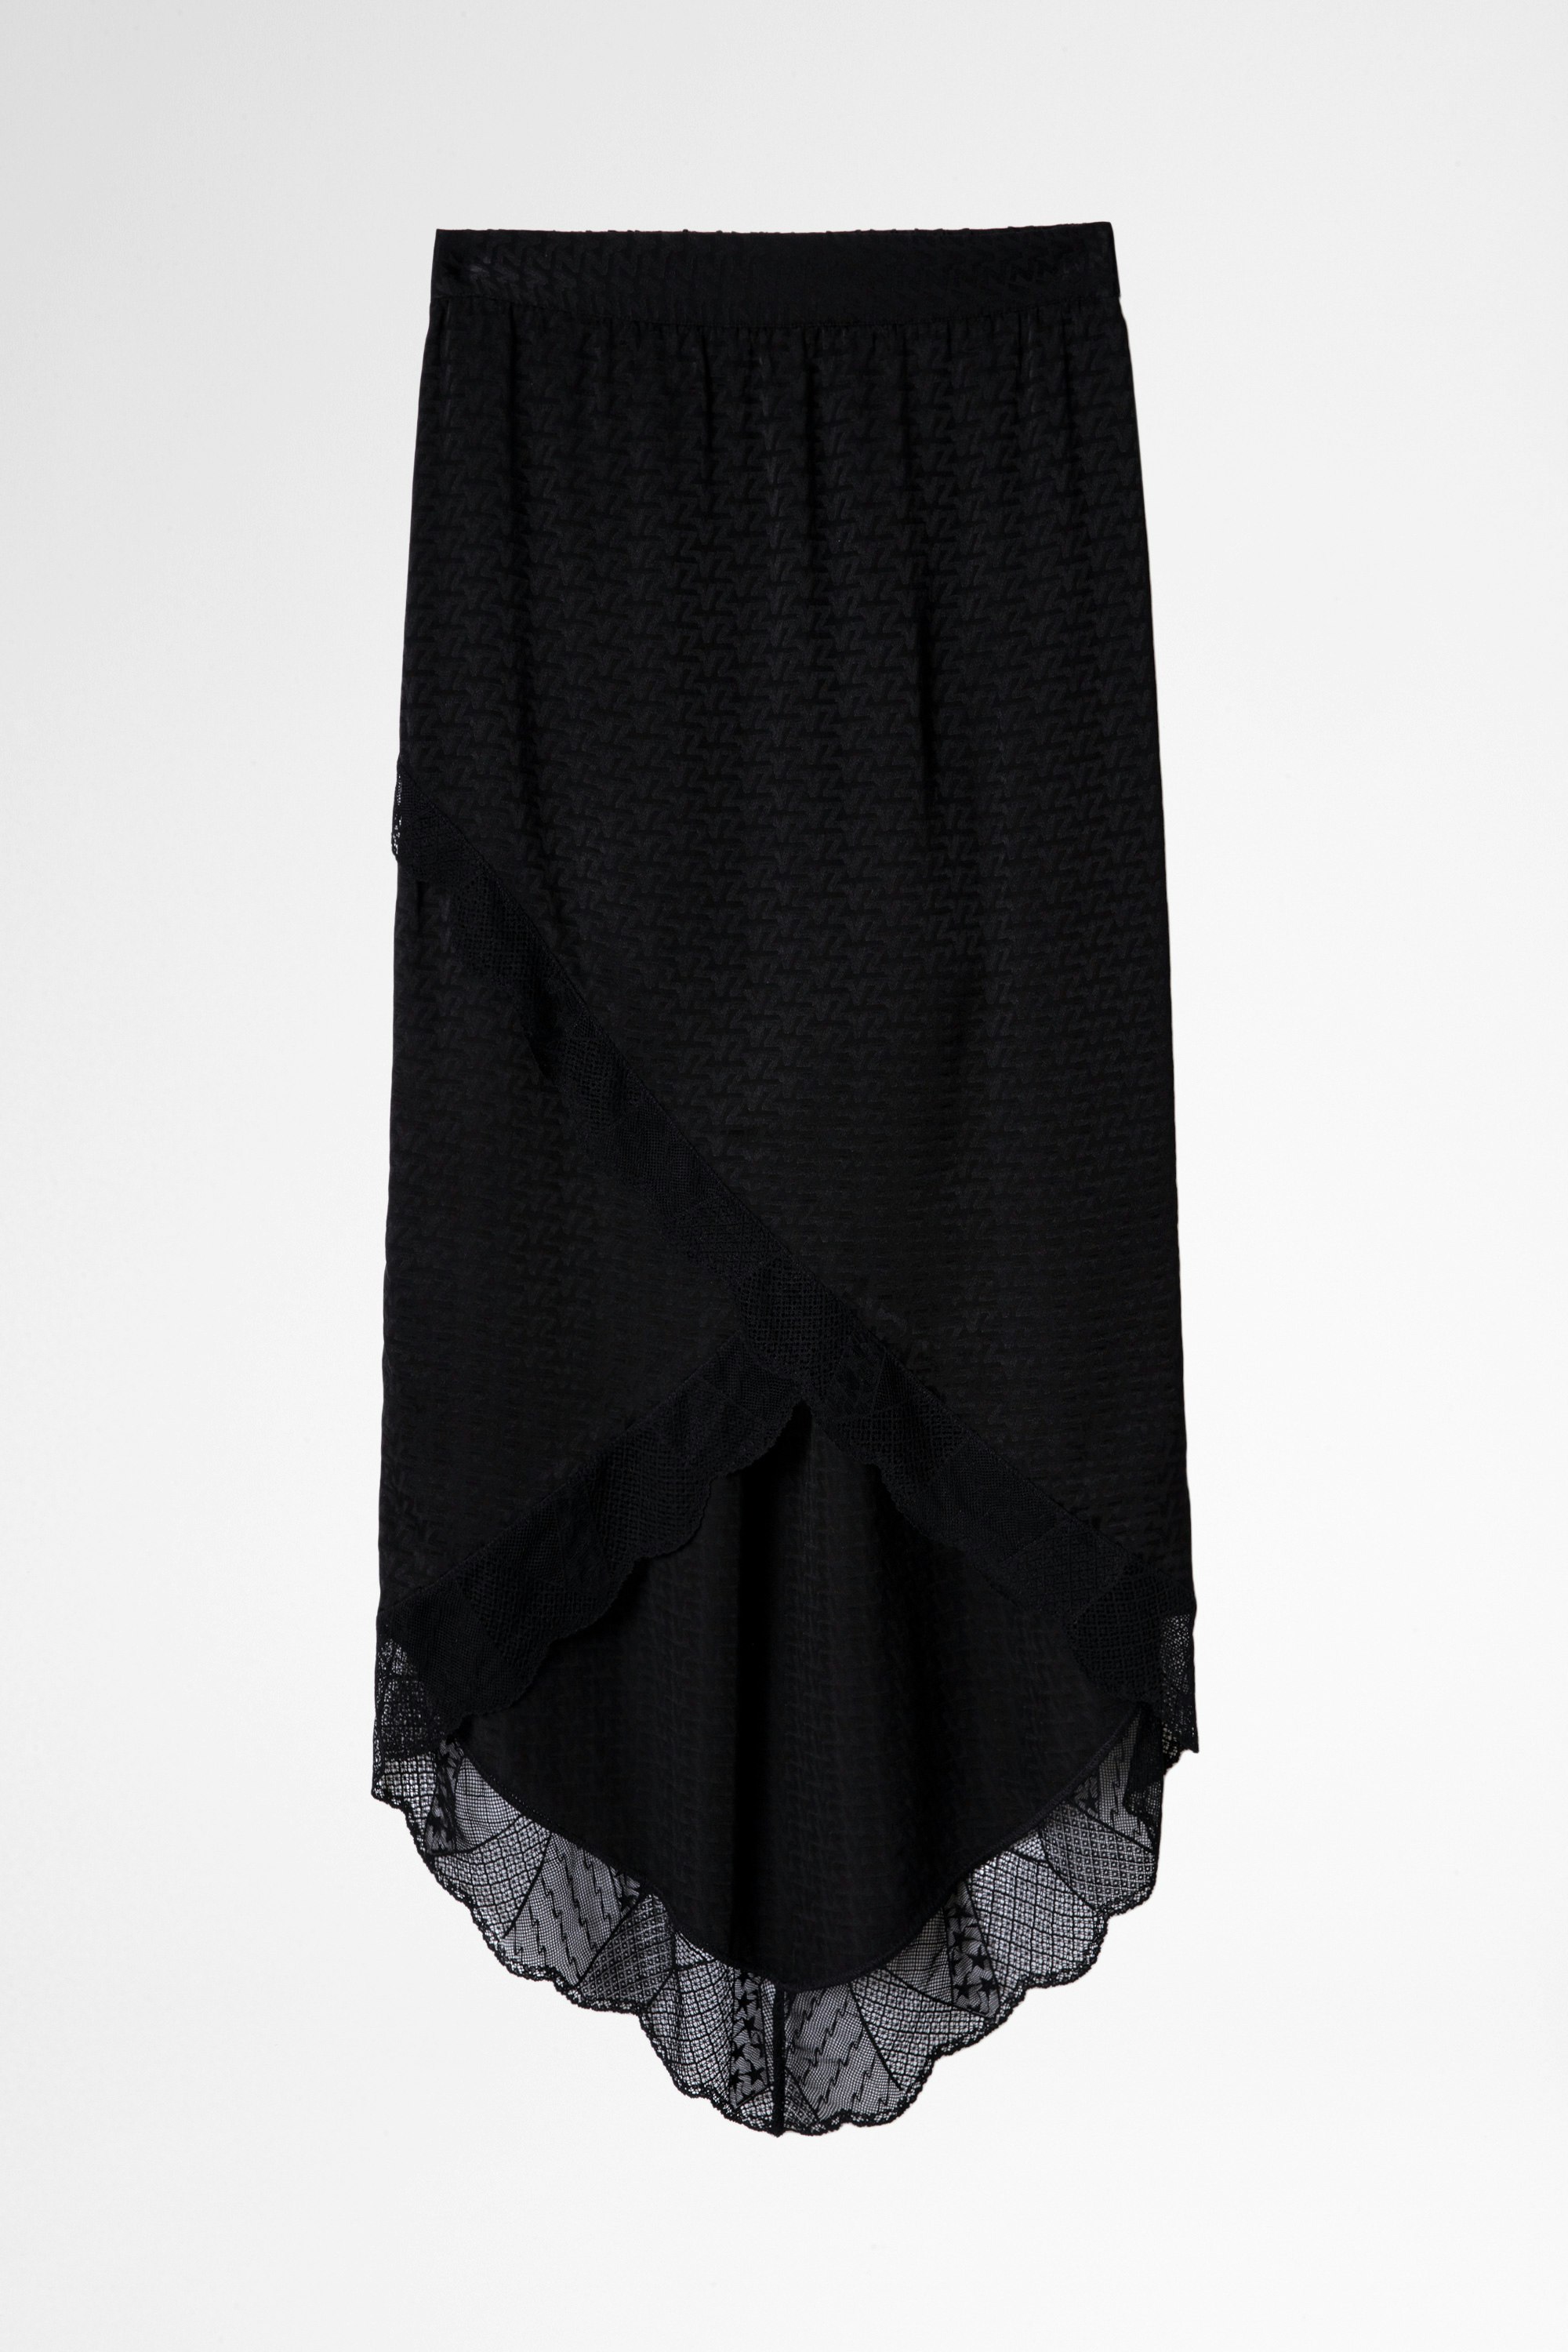 Rock Jeudie Silk Skirt Women's ZV asymmetric skirt in black silk and jacquard